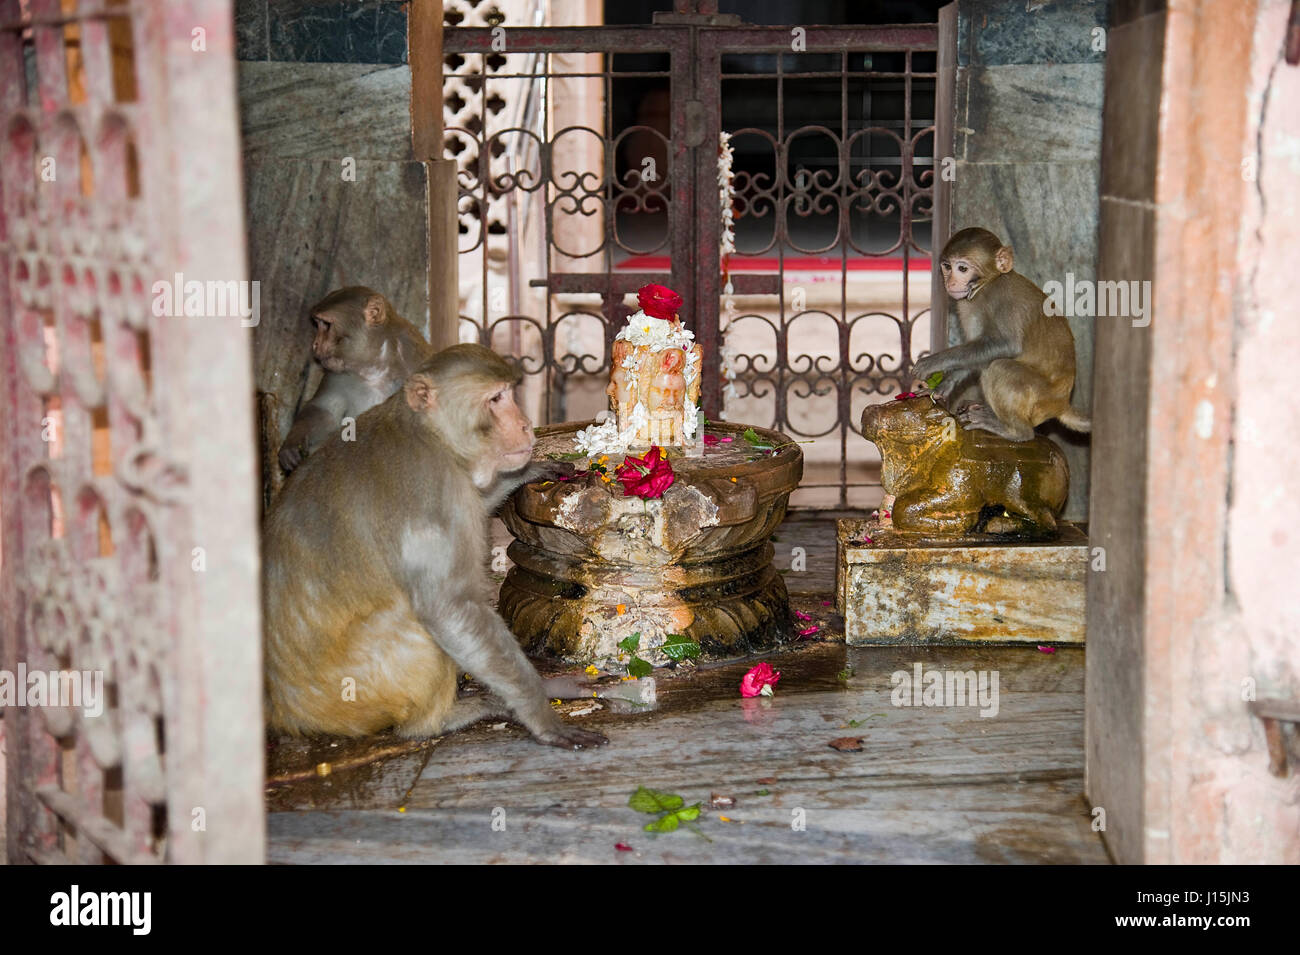 Shivling in temple, vishram ghat, mathura, uttar pradesh, india, asia Stock Photo